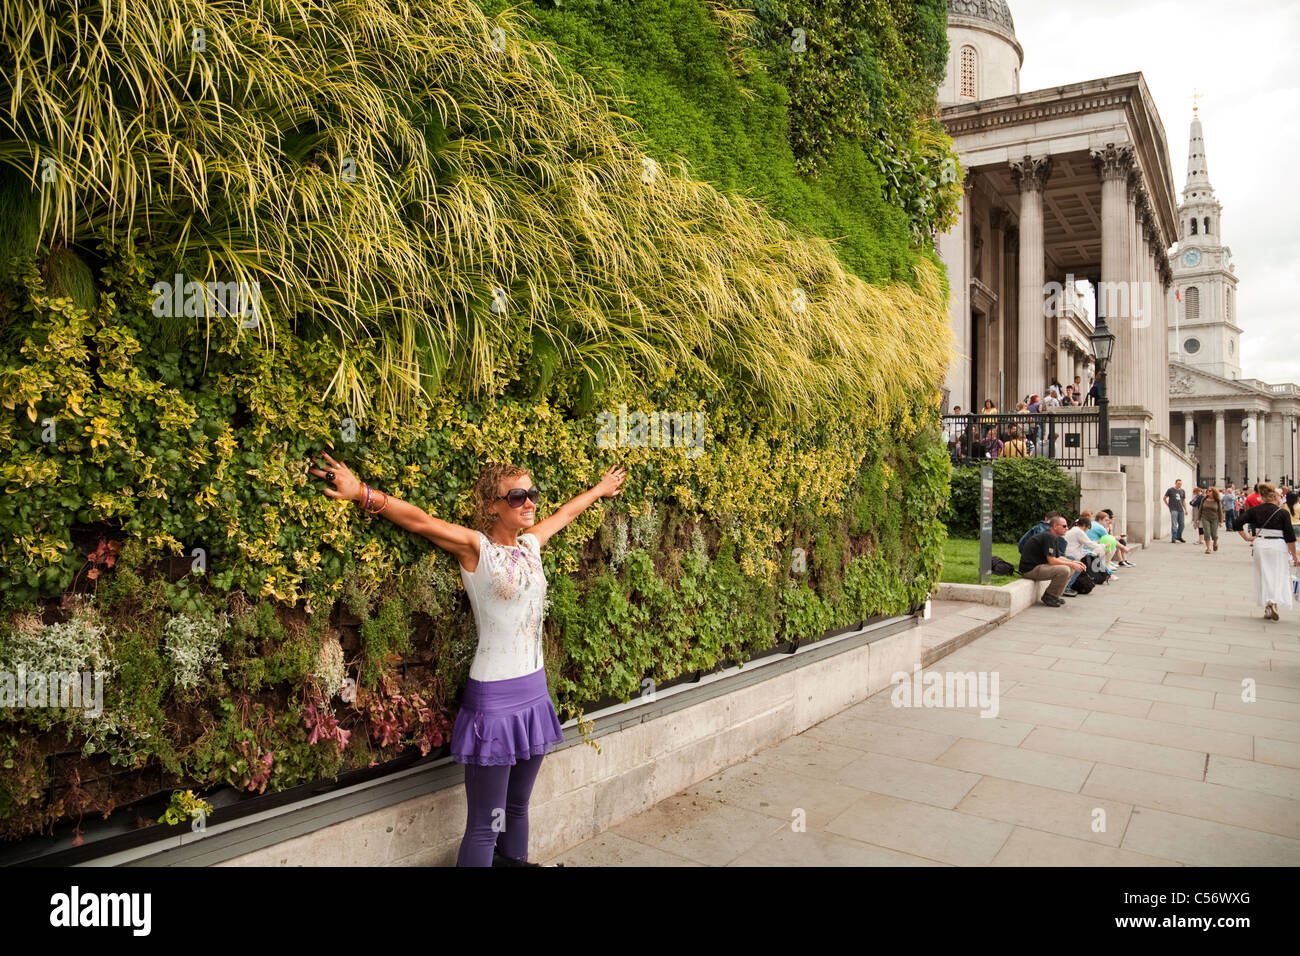 Ein Tourist fotografiert vor "A Living Meisterwerk" - Trafalgar Square in London UK Stockfoto